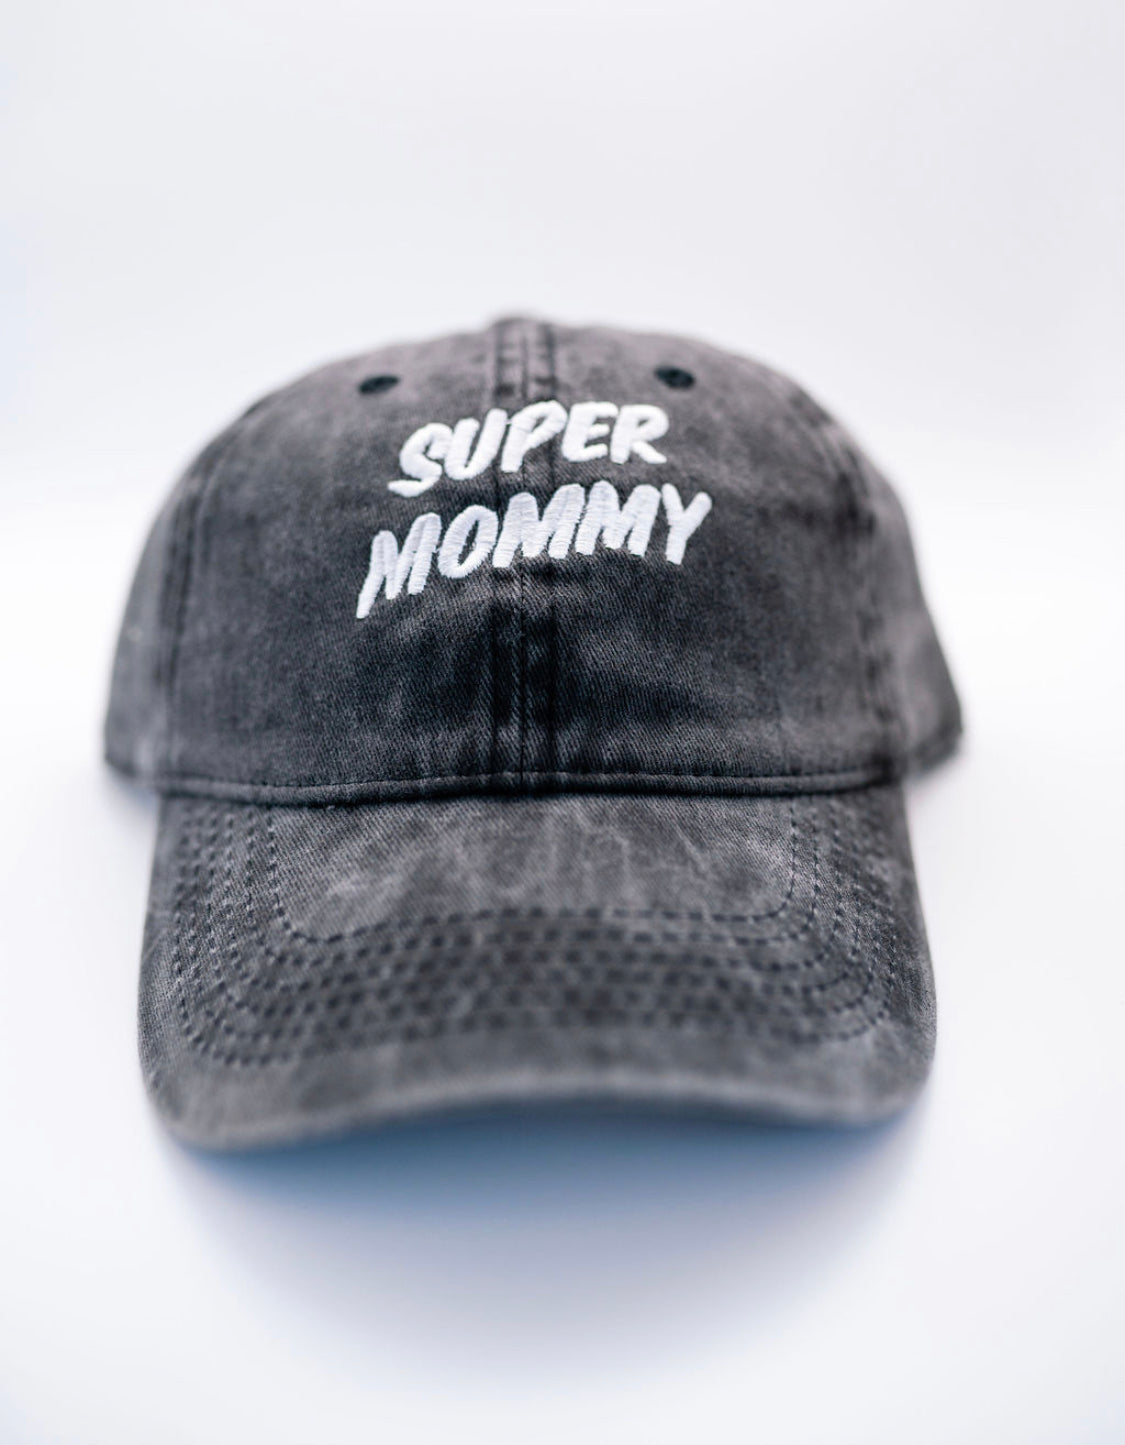 Super Mommy Hat - Black Adult Size